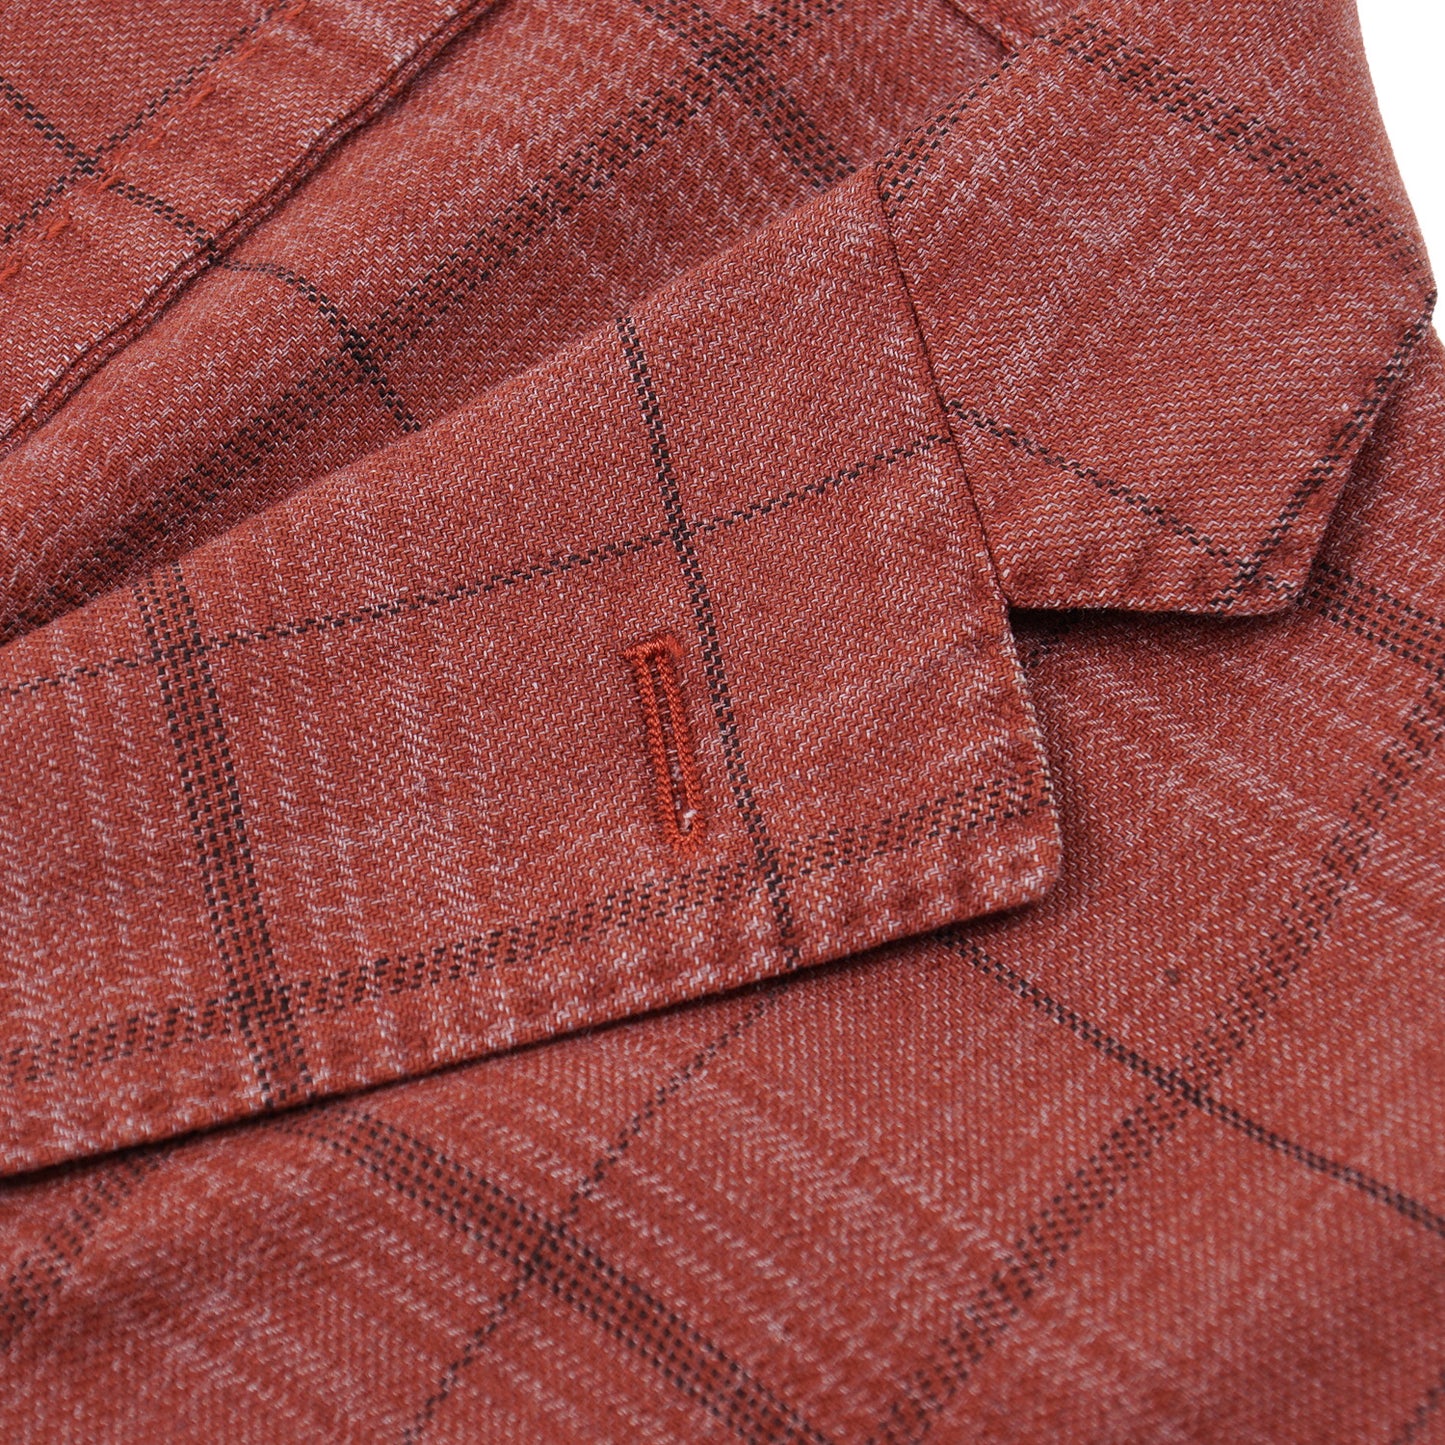 Boglioli Cotton-Linen 'K Jacket' Sport Coat - Top Shelf Apparel